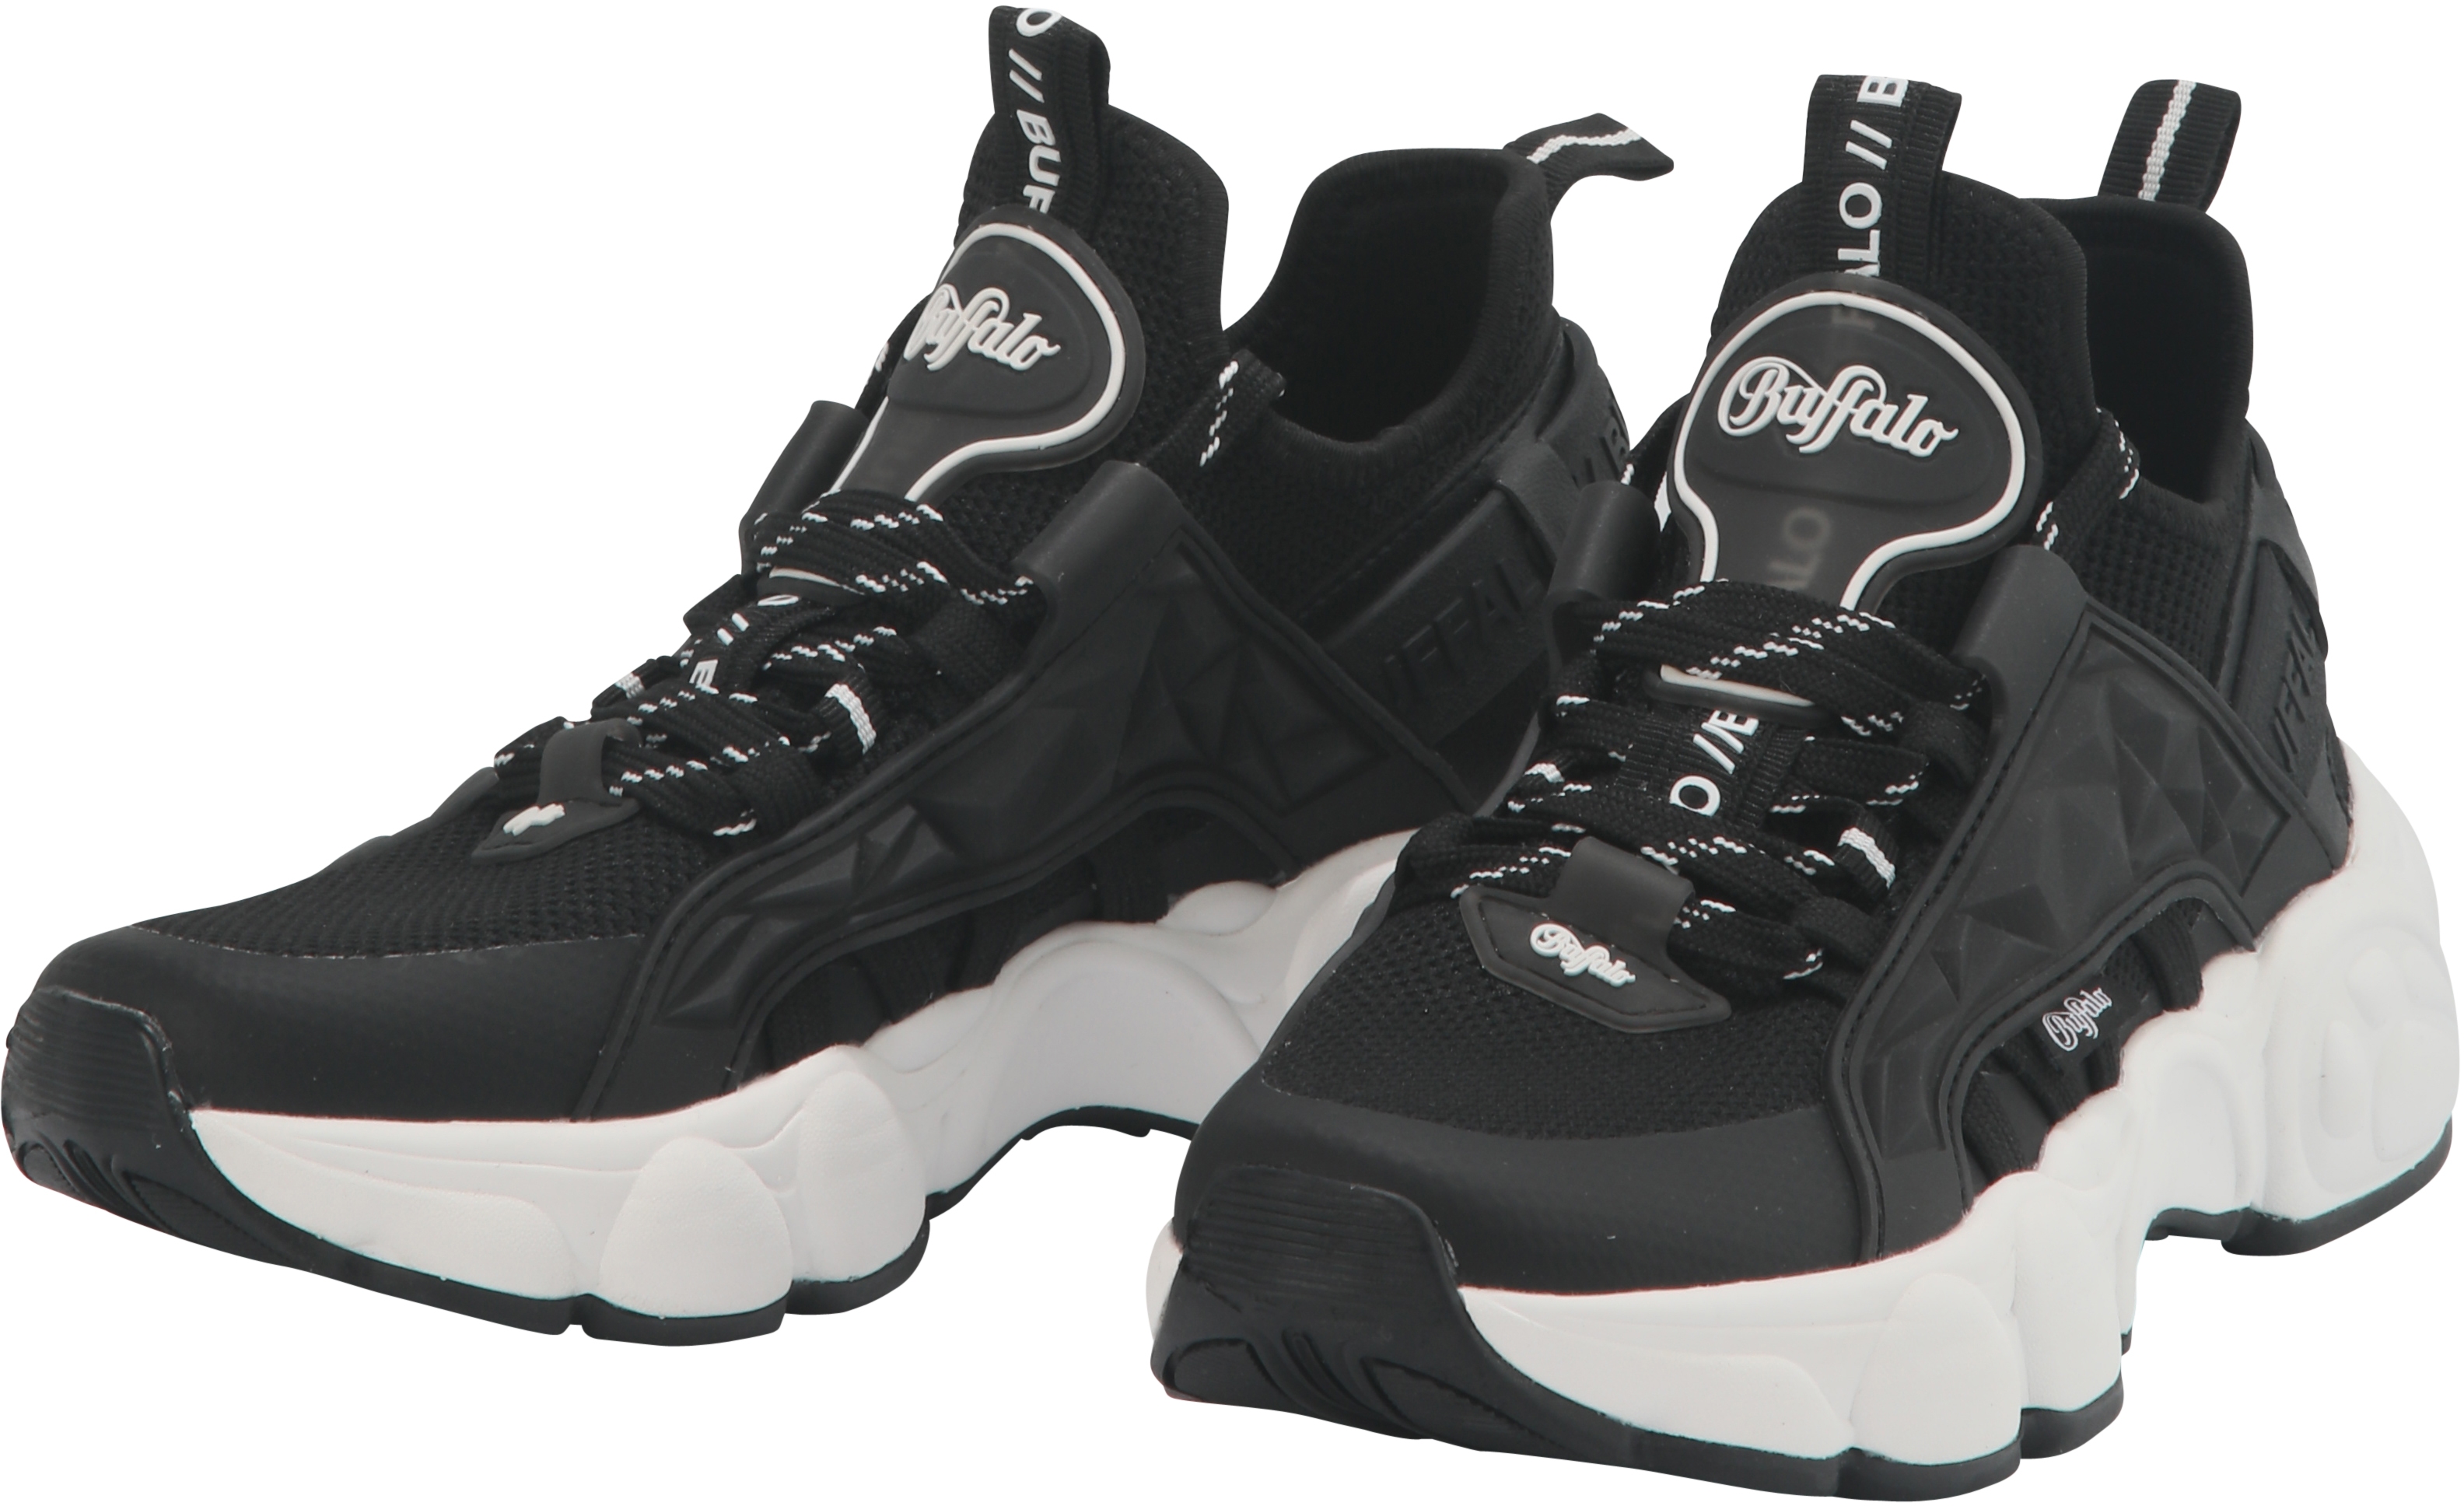 Buffalo Cld Run Sock - Sneaker Low - Textile - Black Textile